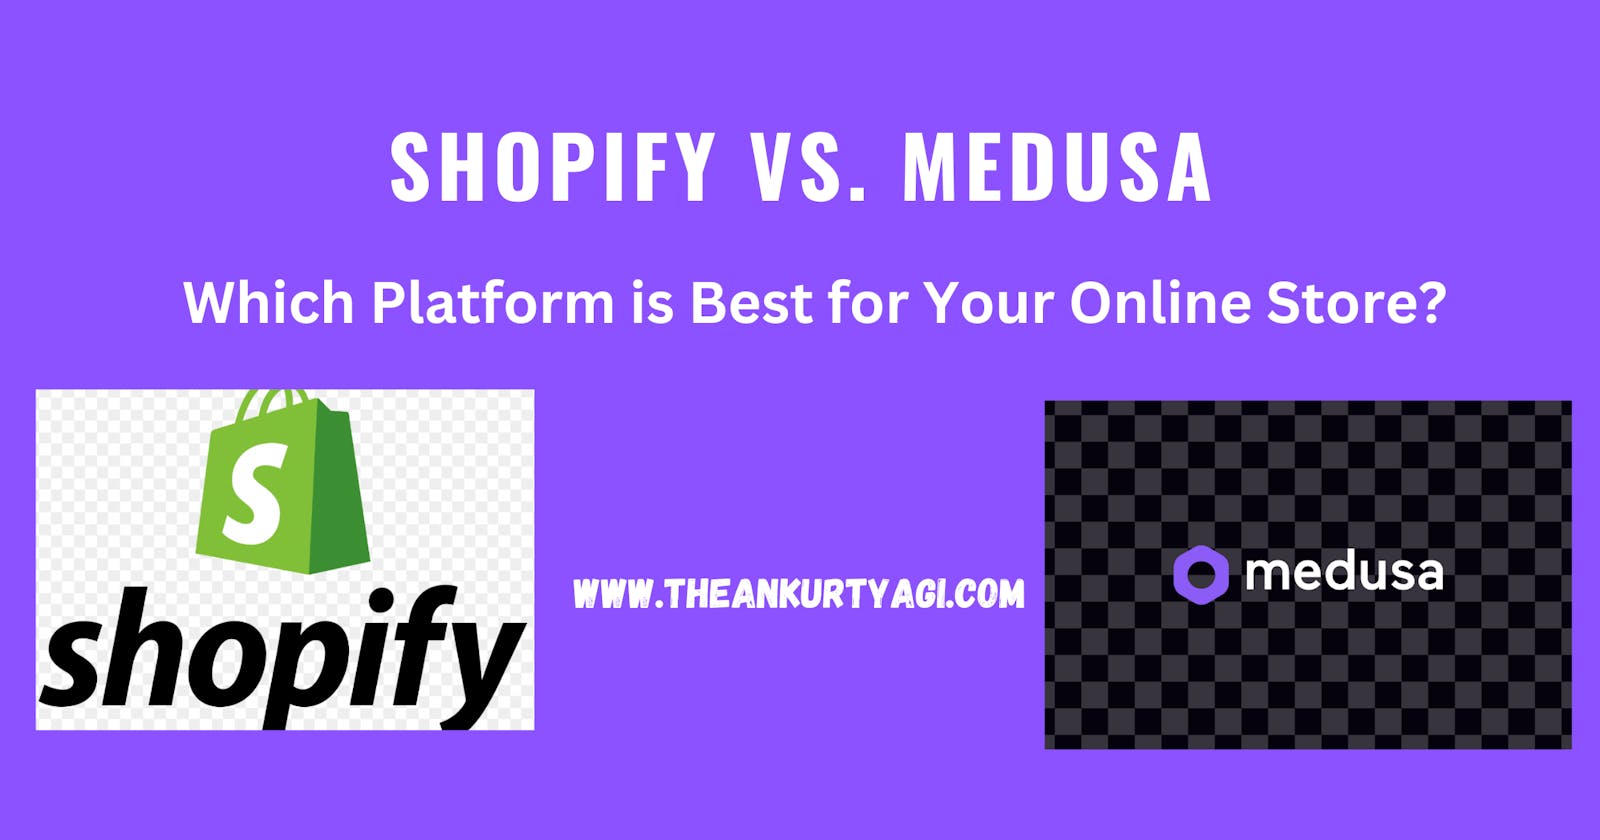 Shopify vs. Medusa